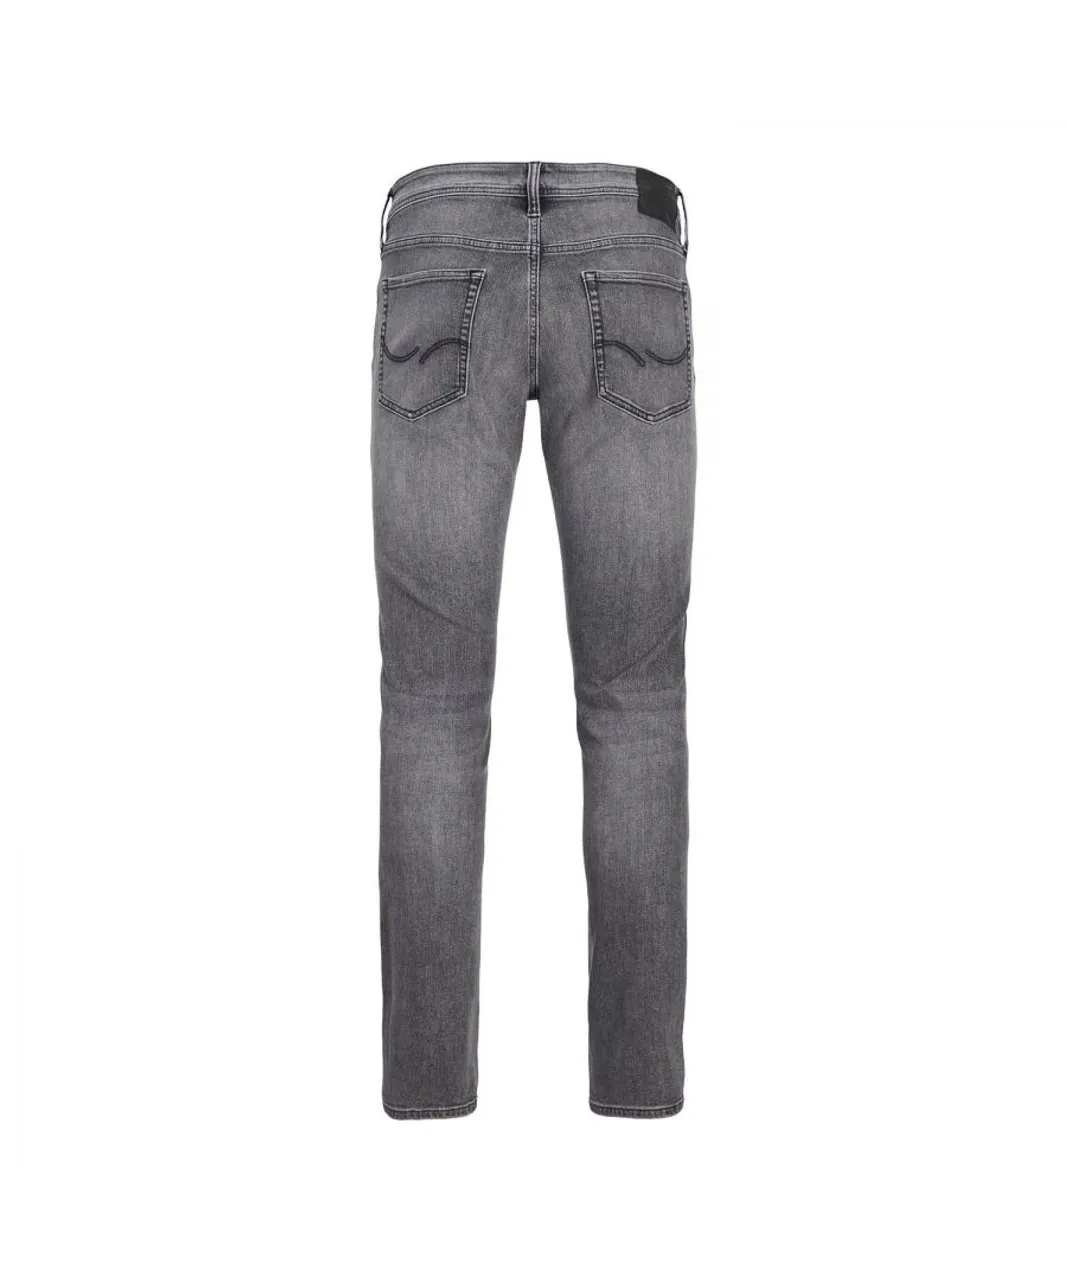 Jack & Jones Mens Jeans 349 Glenn Original Slim Fit and Low Rise Denim for Men - Black Cotton